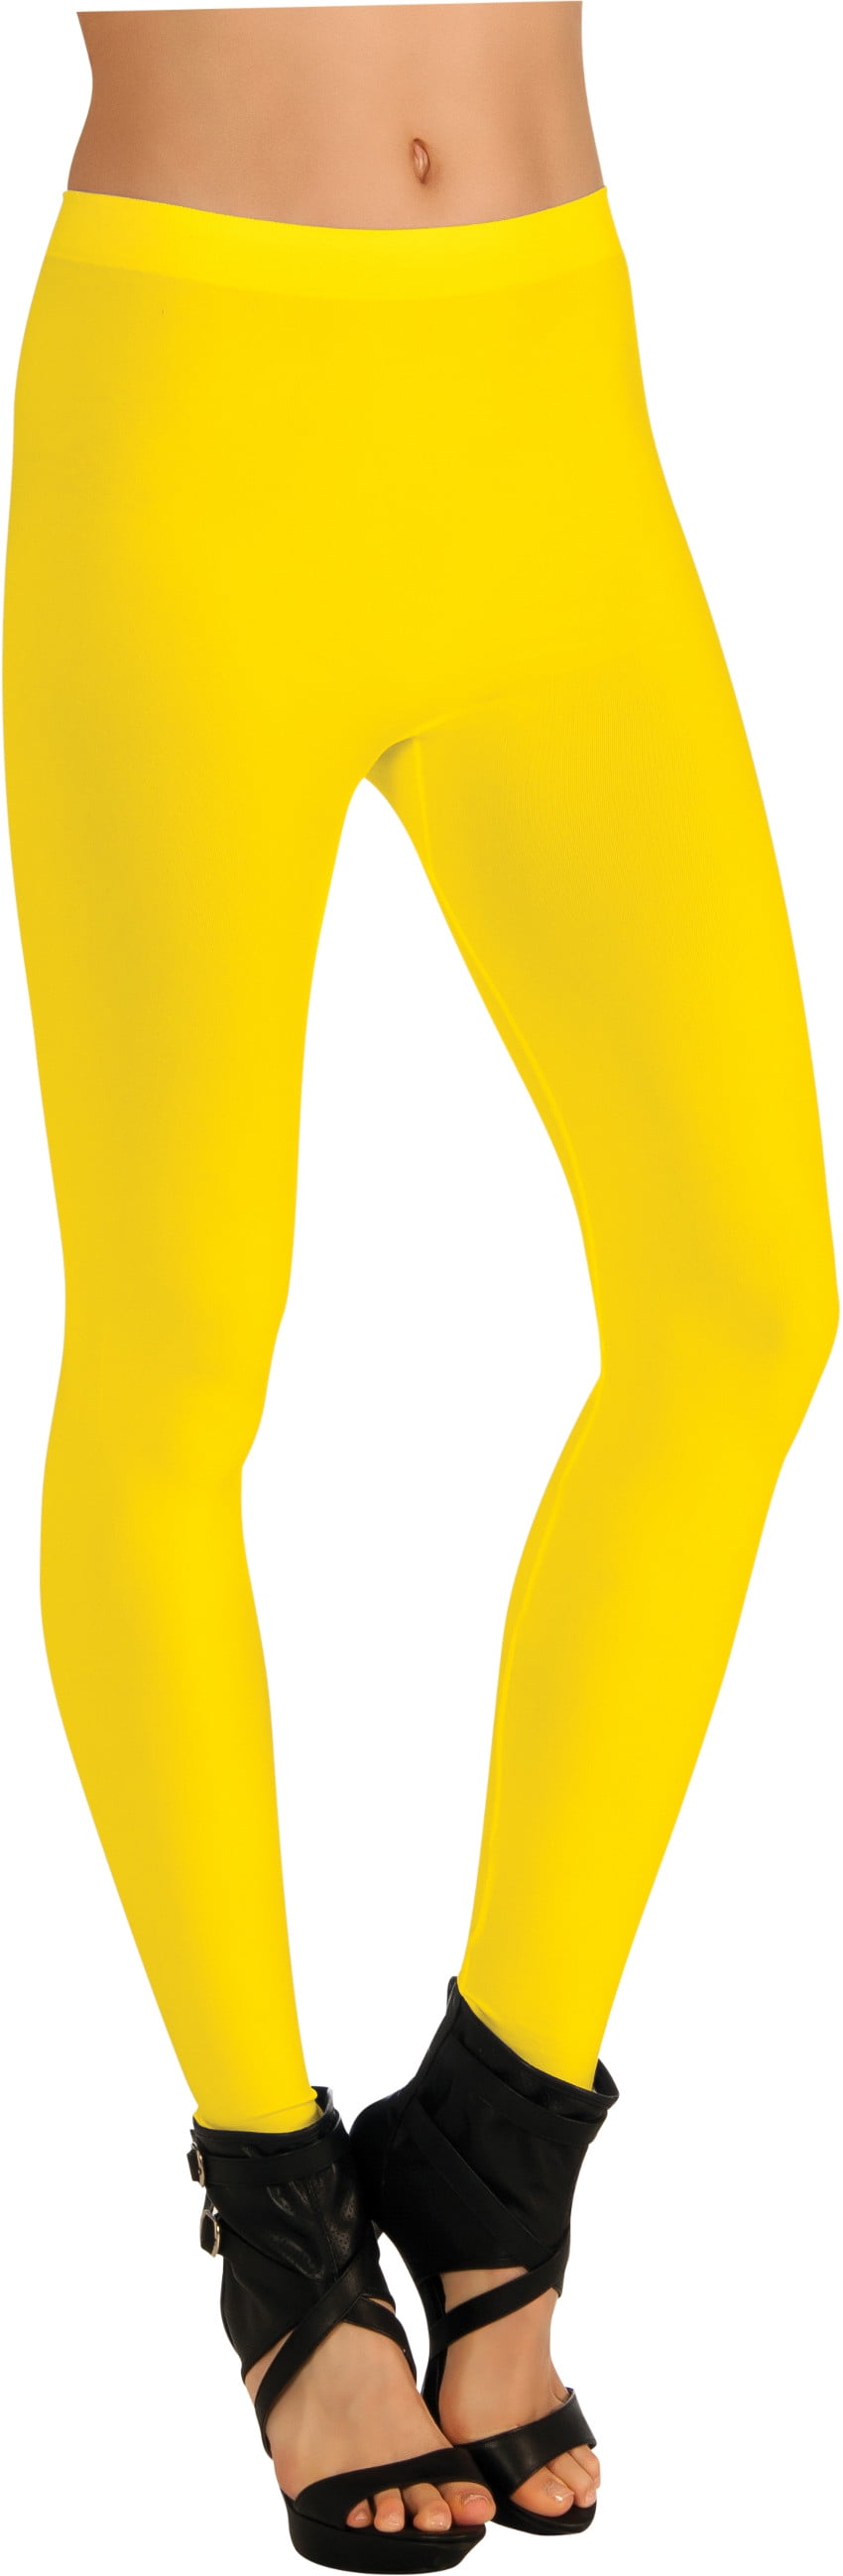 Желтые лосины. Лосины с желтыми полосками. Детские леггинсы желтого цвета. Желтые легинсы Nike.